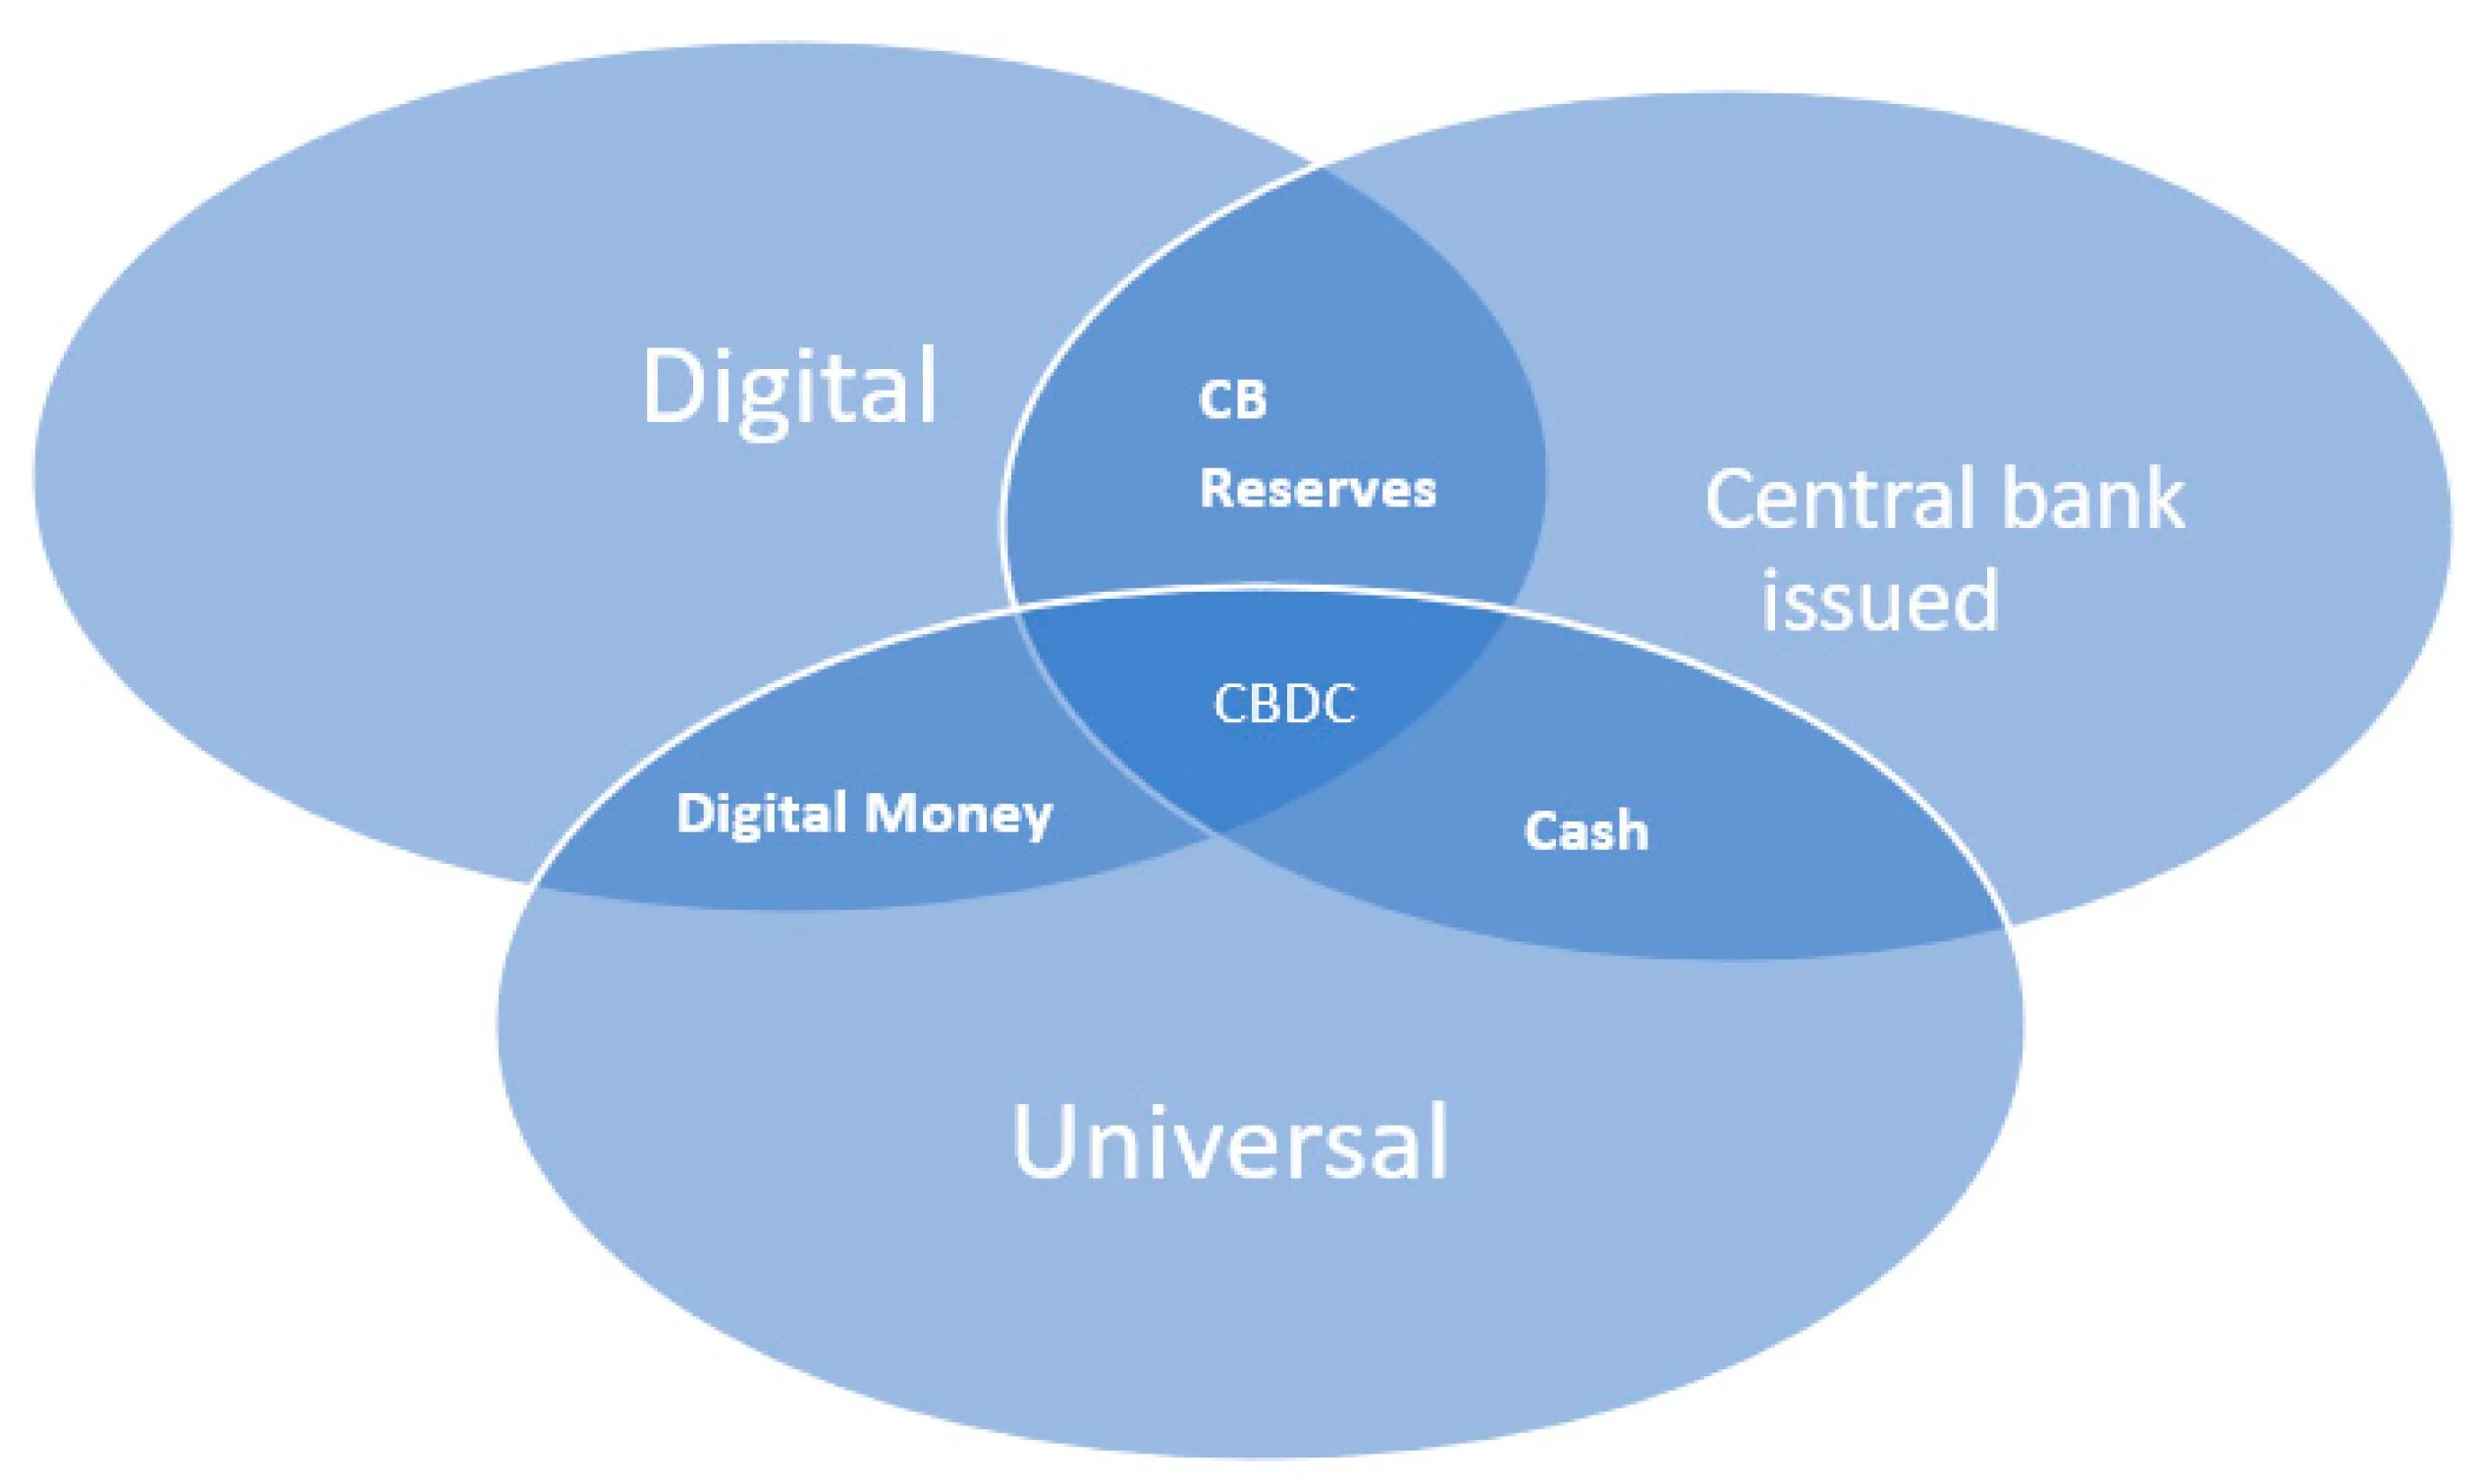 Central Bank Digital currency. Цифровой банк CBDC. CBDC, Central Bank Digital currency, (цифровая валюта центрального банка).. CBDC криптовалюта. Issuing year